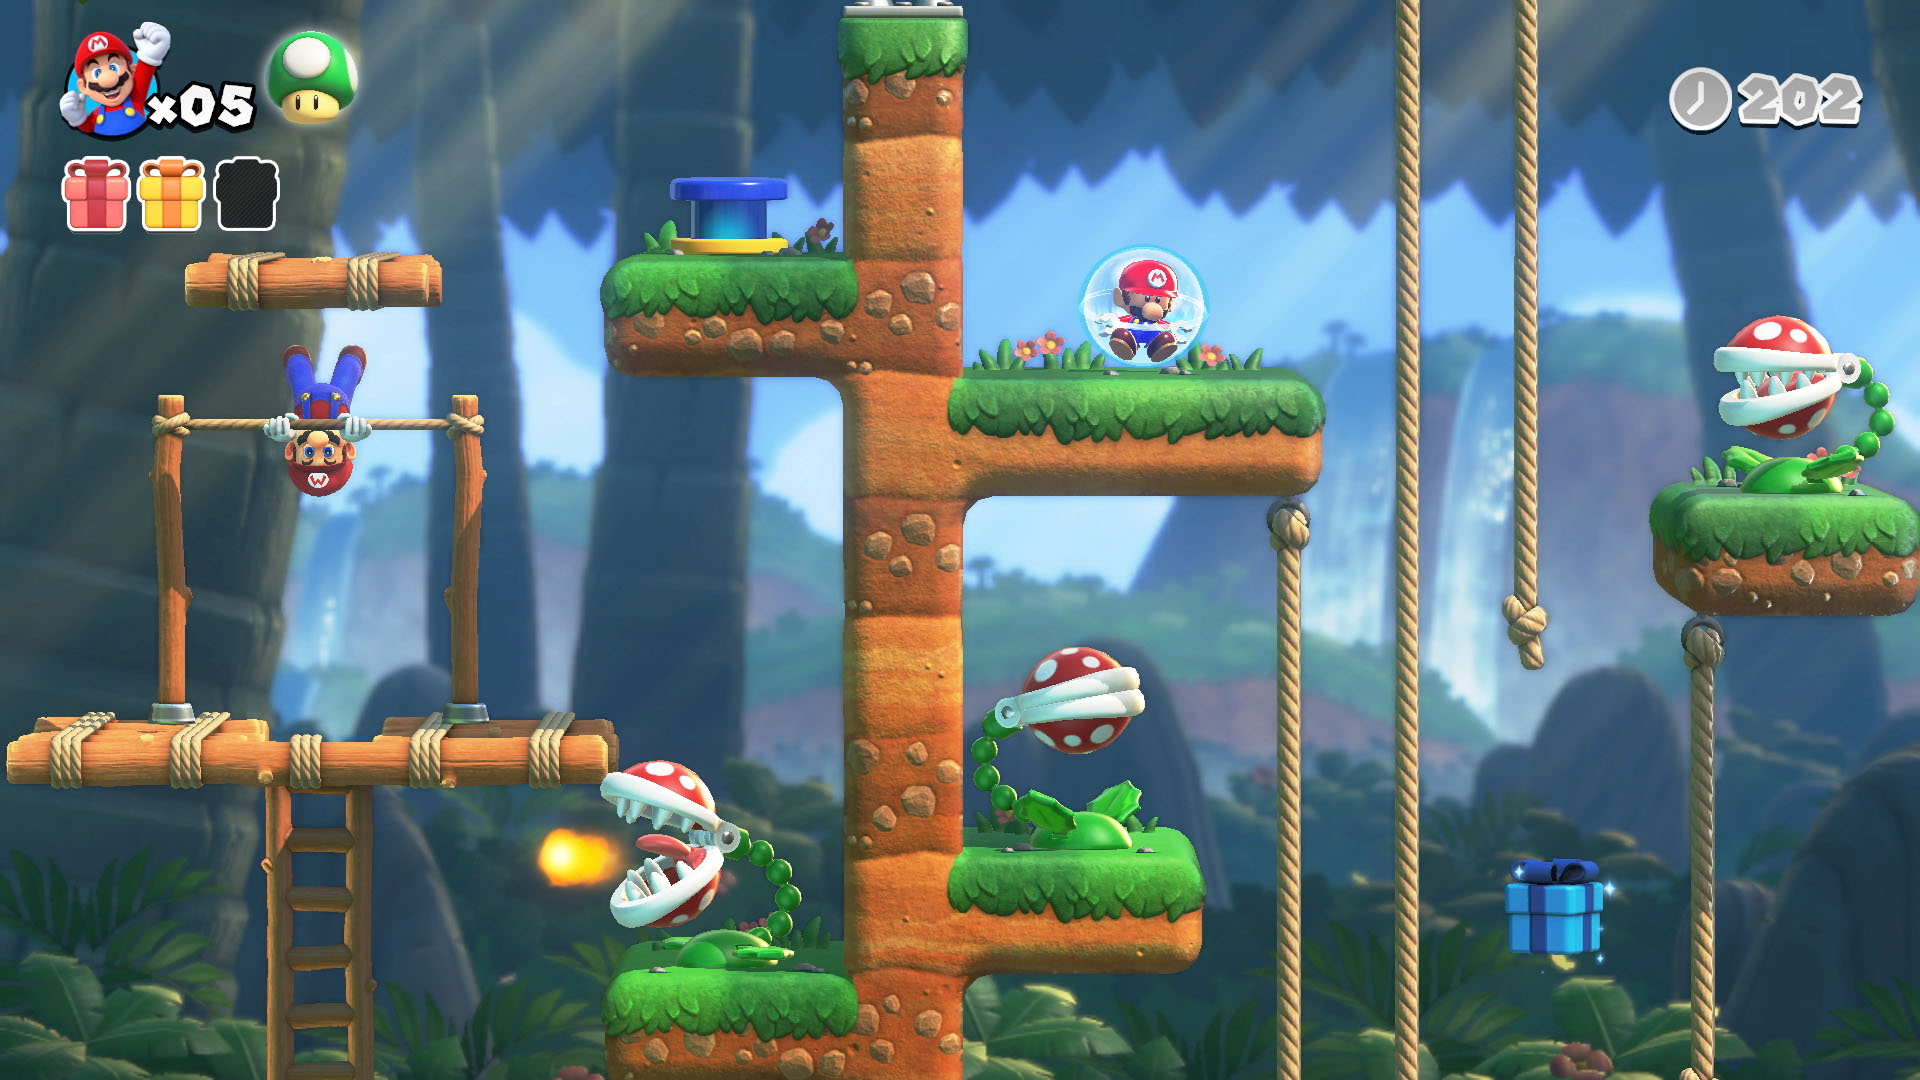 Mario swings on a vine in Mario vs. Donkey Kong.